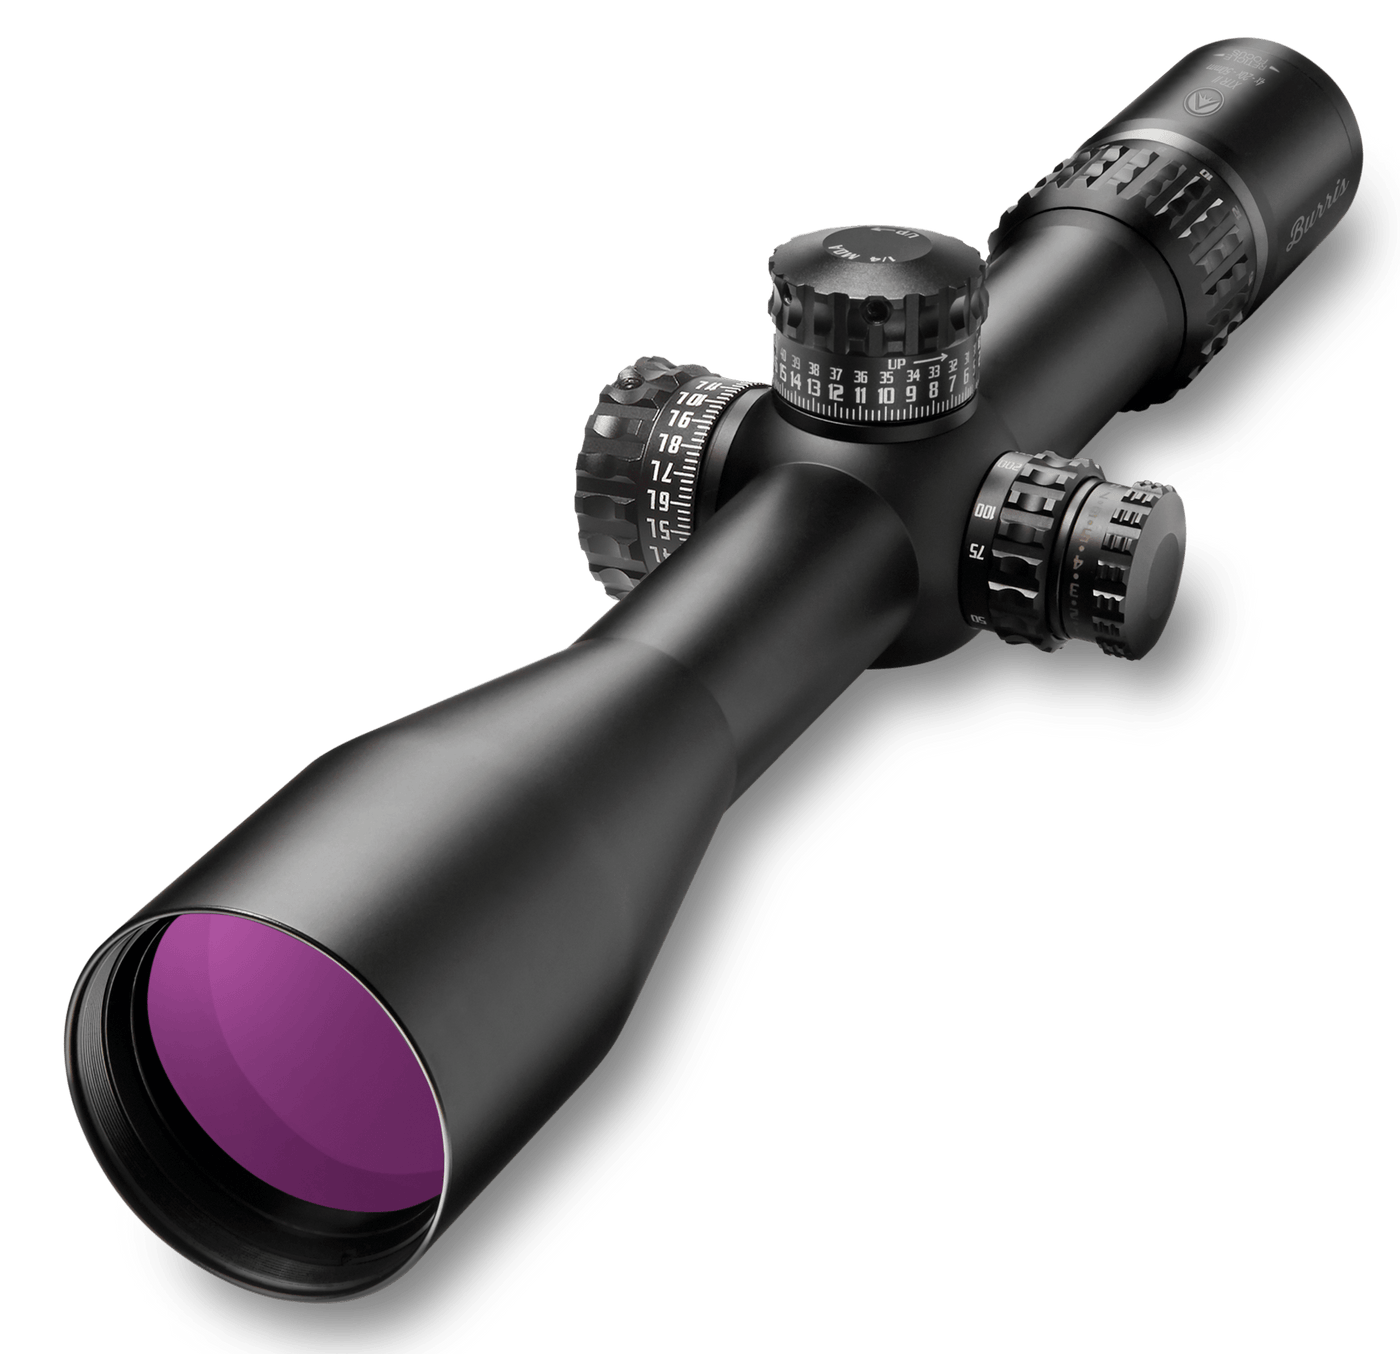 Burris Burris Xtreme Tactical Xtr Ii Scope 4-20x50mm Illuminated Scr Mil Front Focal Optics and Accessories